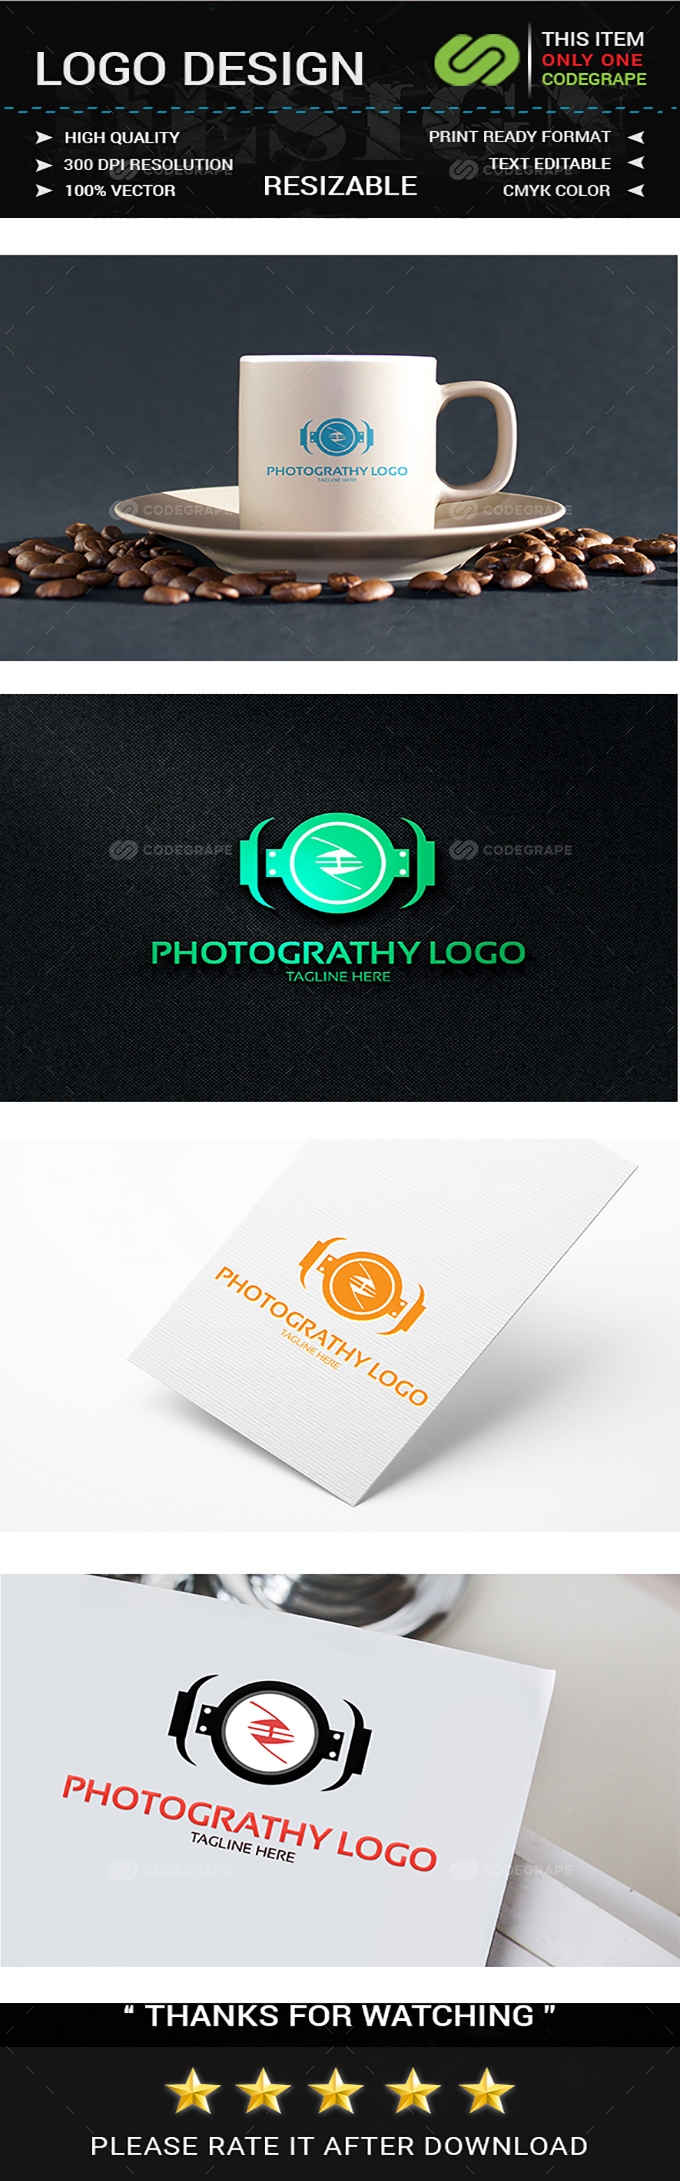 Photography Logo 2